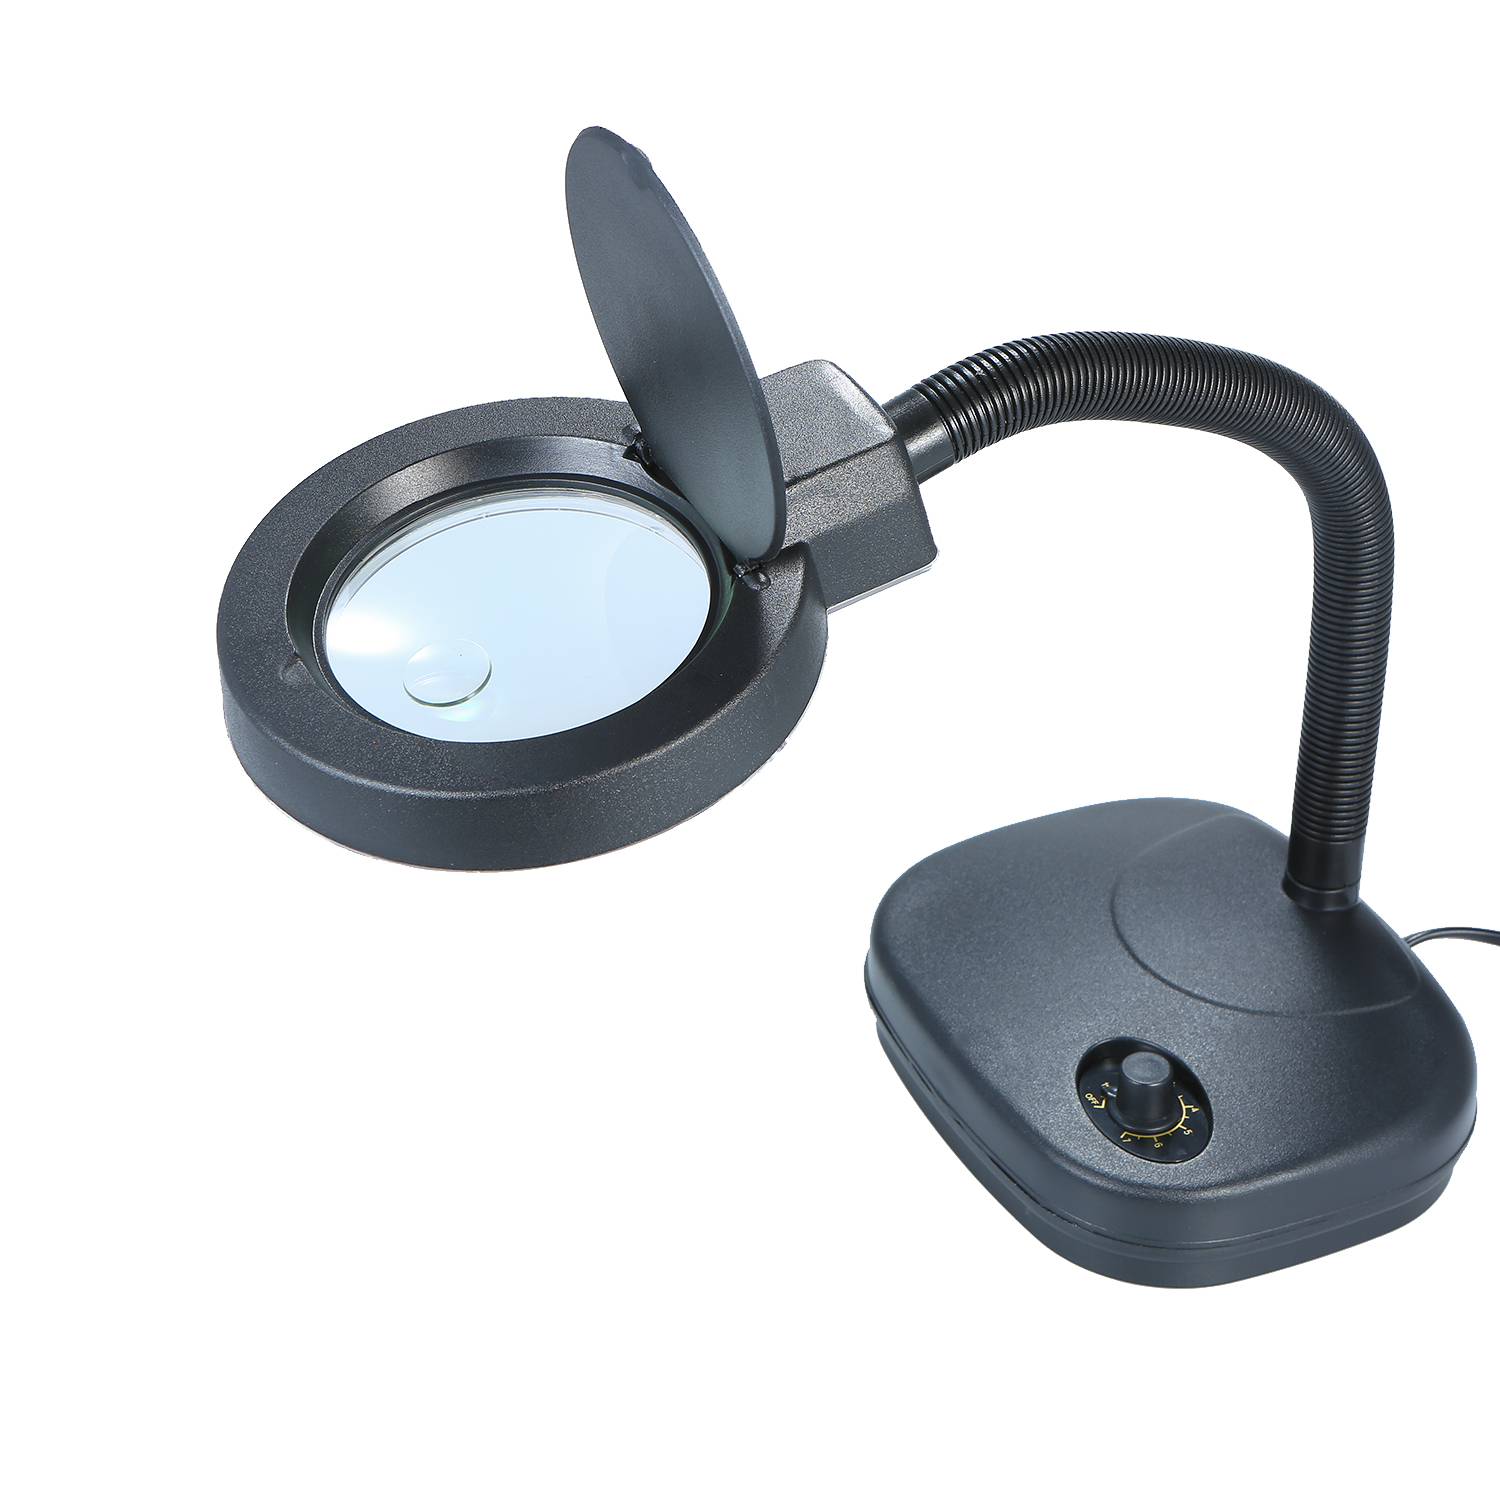 7-type Bench Magnifier 10x/5x Flexible LED Table Desktop Magnifying Glass Lamp Lens 7-Grade LED Light for Crafting Engraving